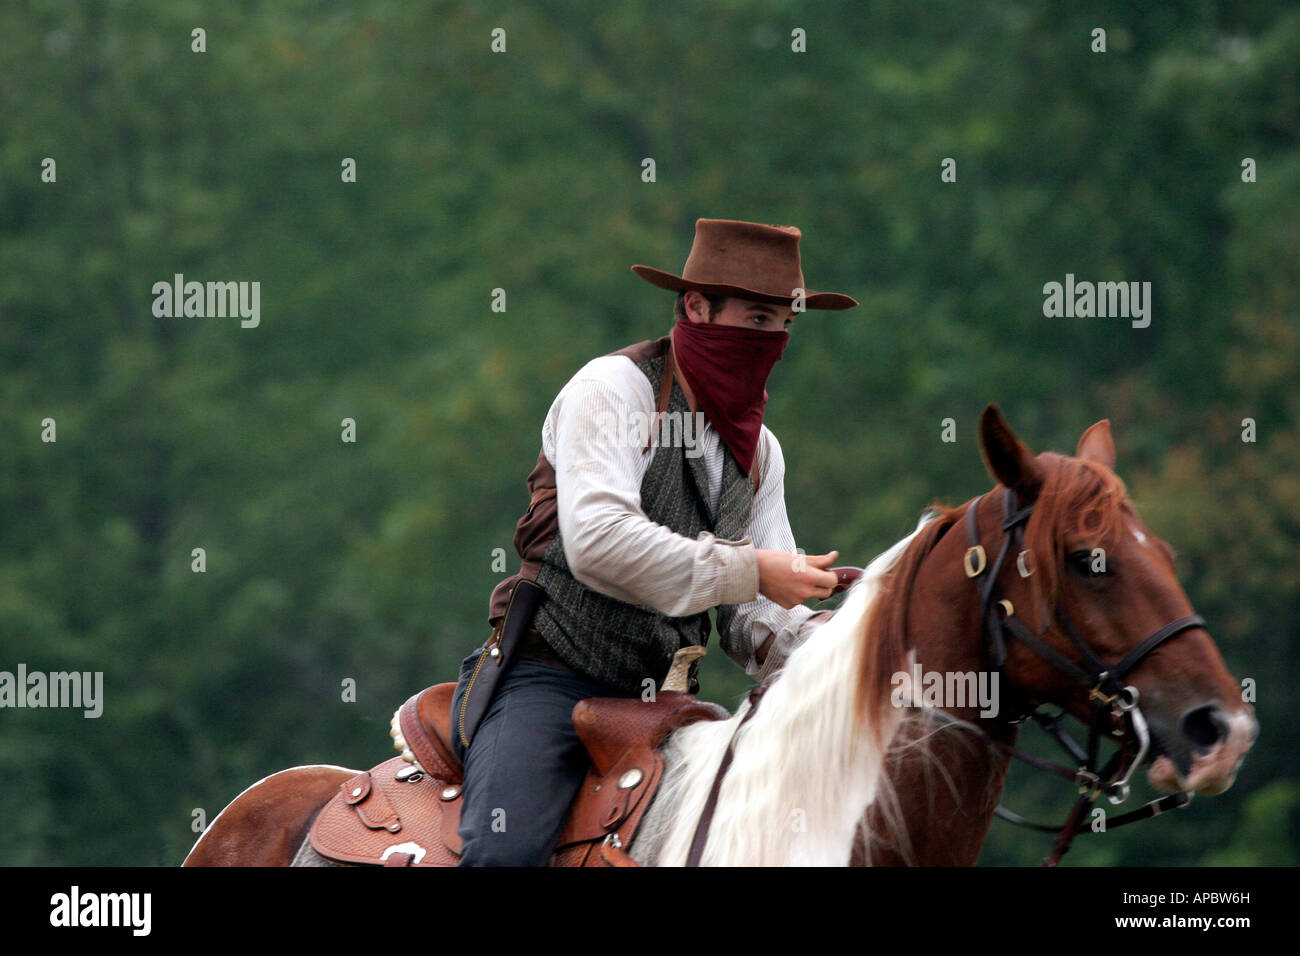 A young male cowboy bandit riding horseback Stock Photo